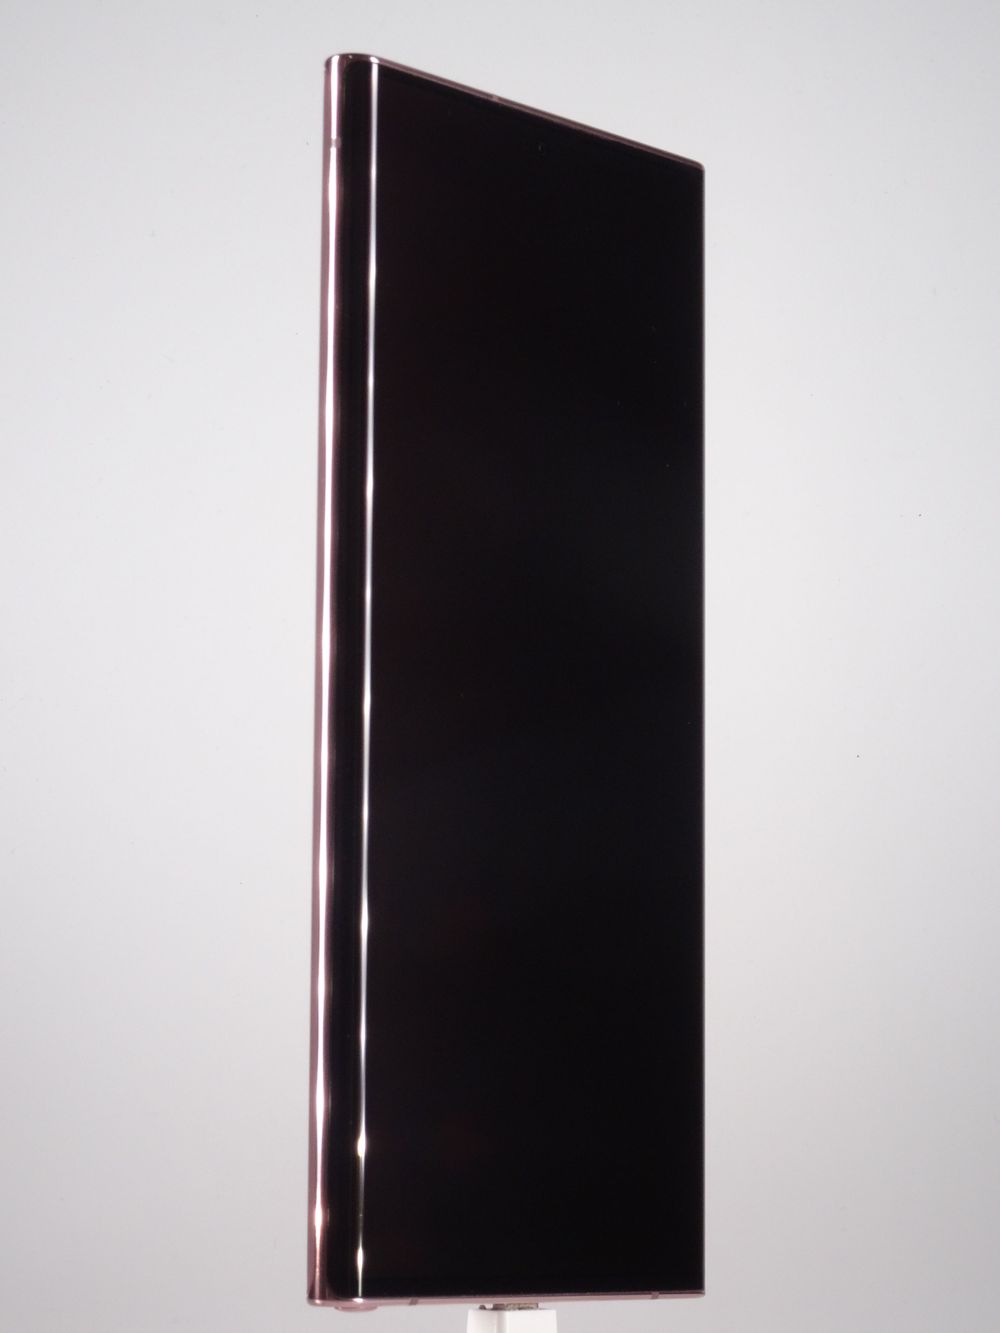 Telefon mobil Samsung Galaxy Note 20 Ultra 5G Dual Sim, Bronze, 256 GB, Foarte Bun